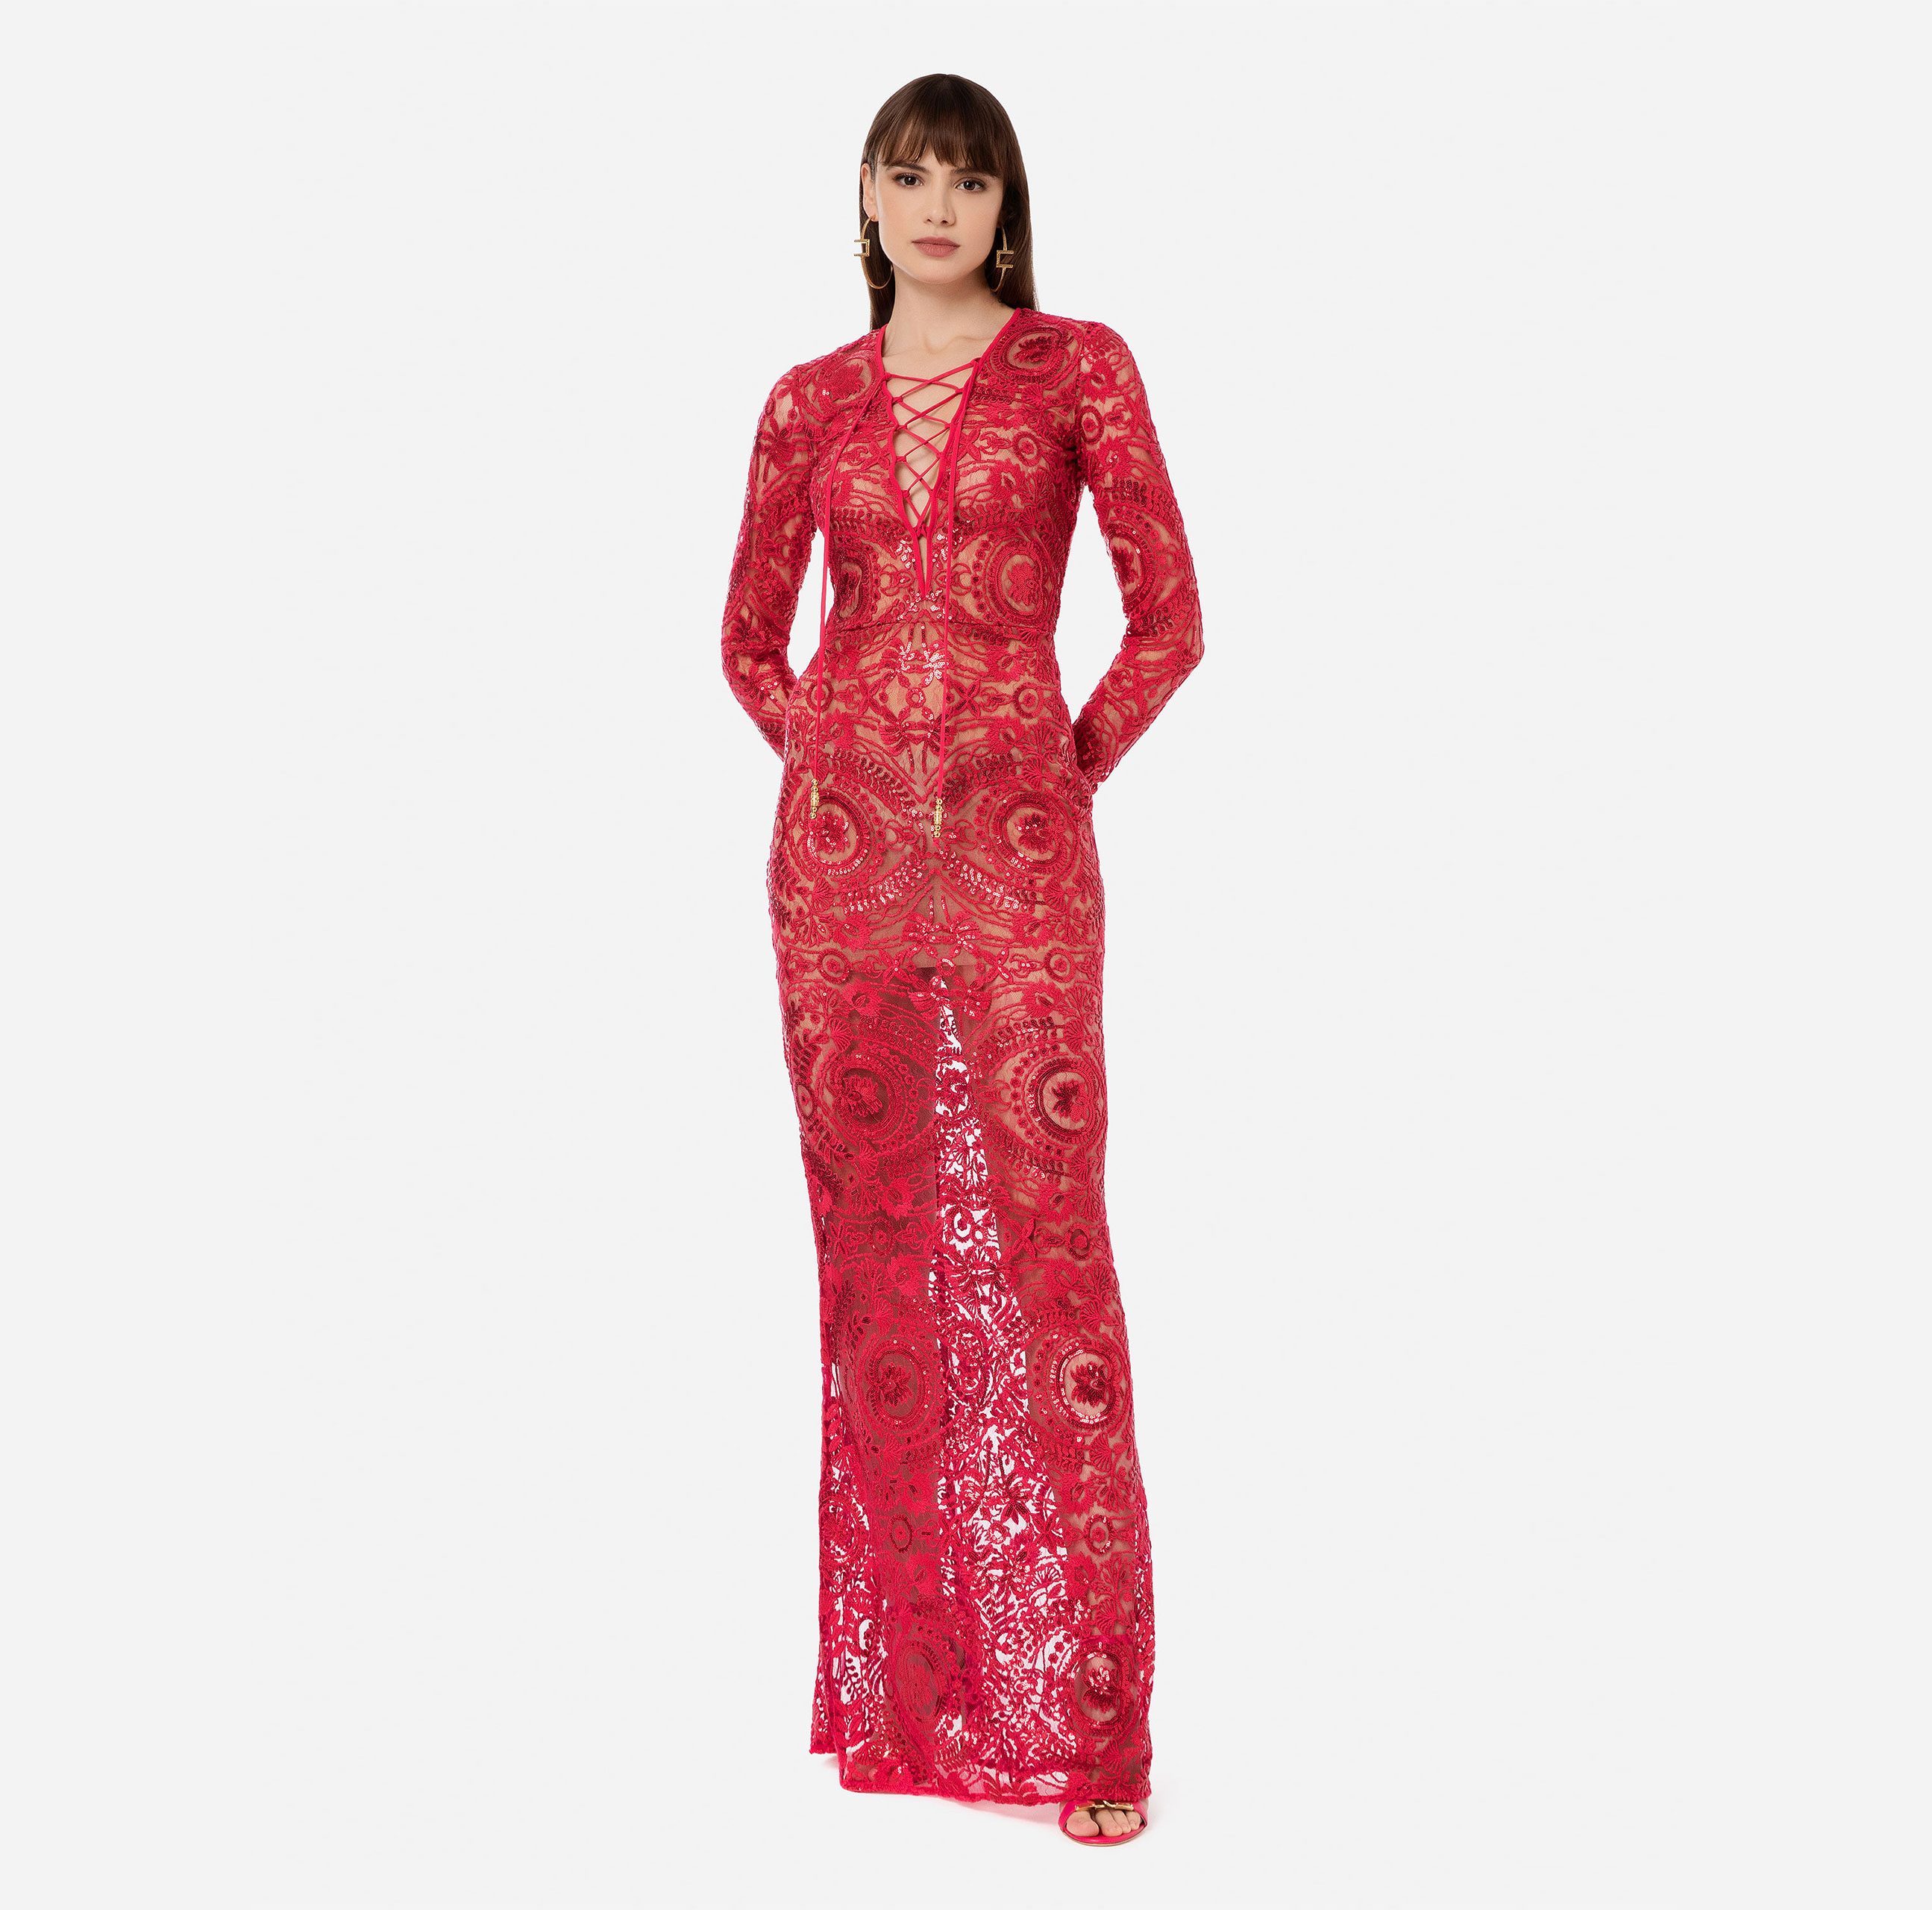 Red carpet lace dress with sequins - Elisabetta Franchi